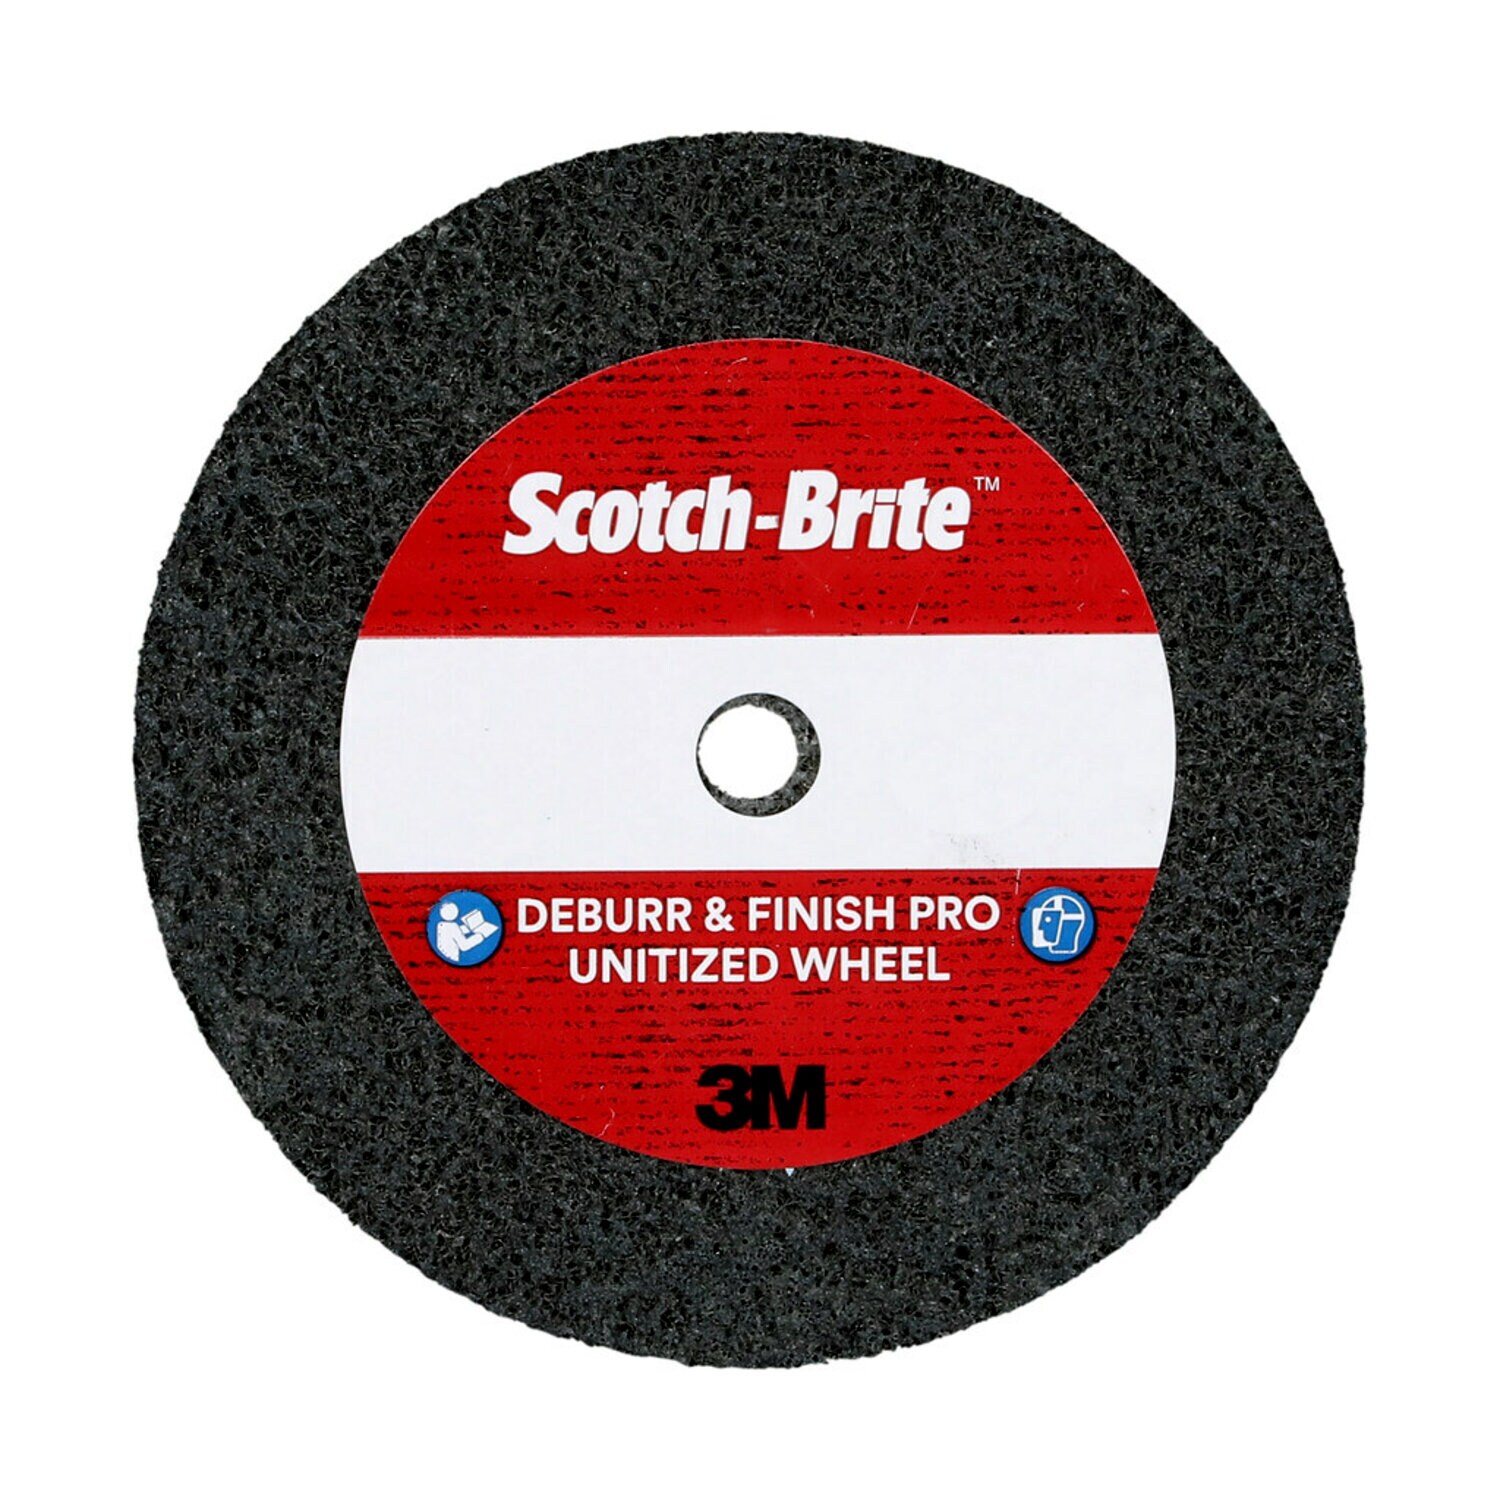 7100143403 - Scotch-Brite Deburr & Finish Pro Unitized Wheel, DP-UW, 2S Fine, 2 in x
1/4 in x 1/4 in, 60 ea/Case